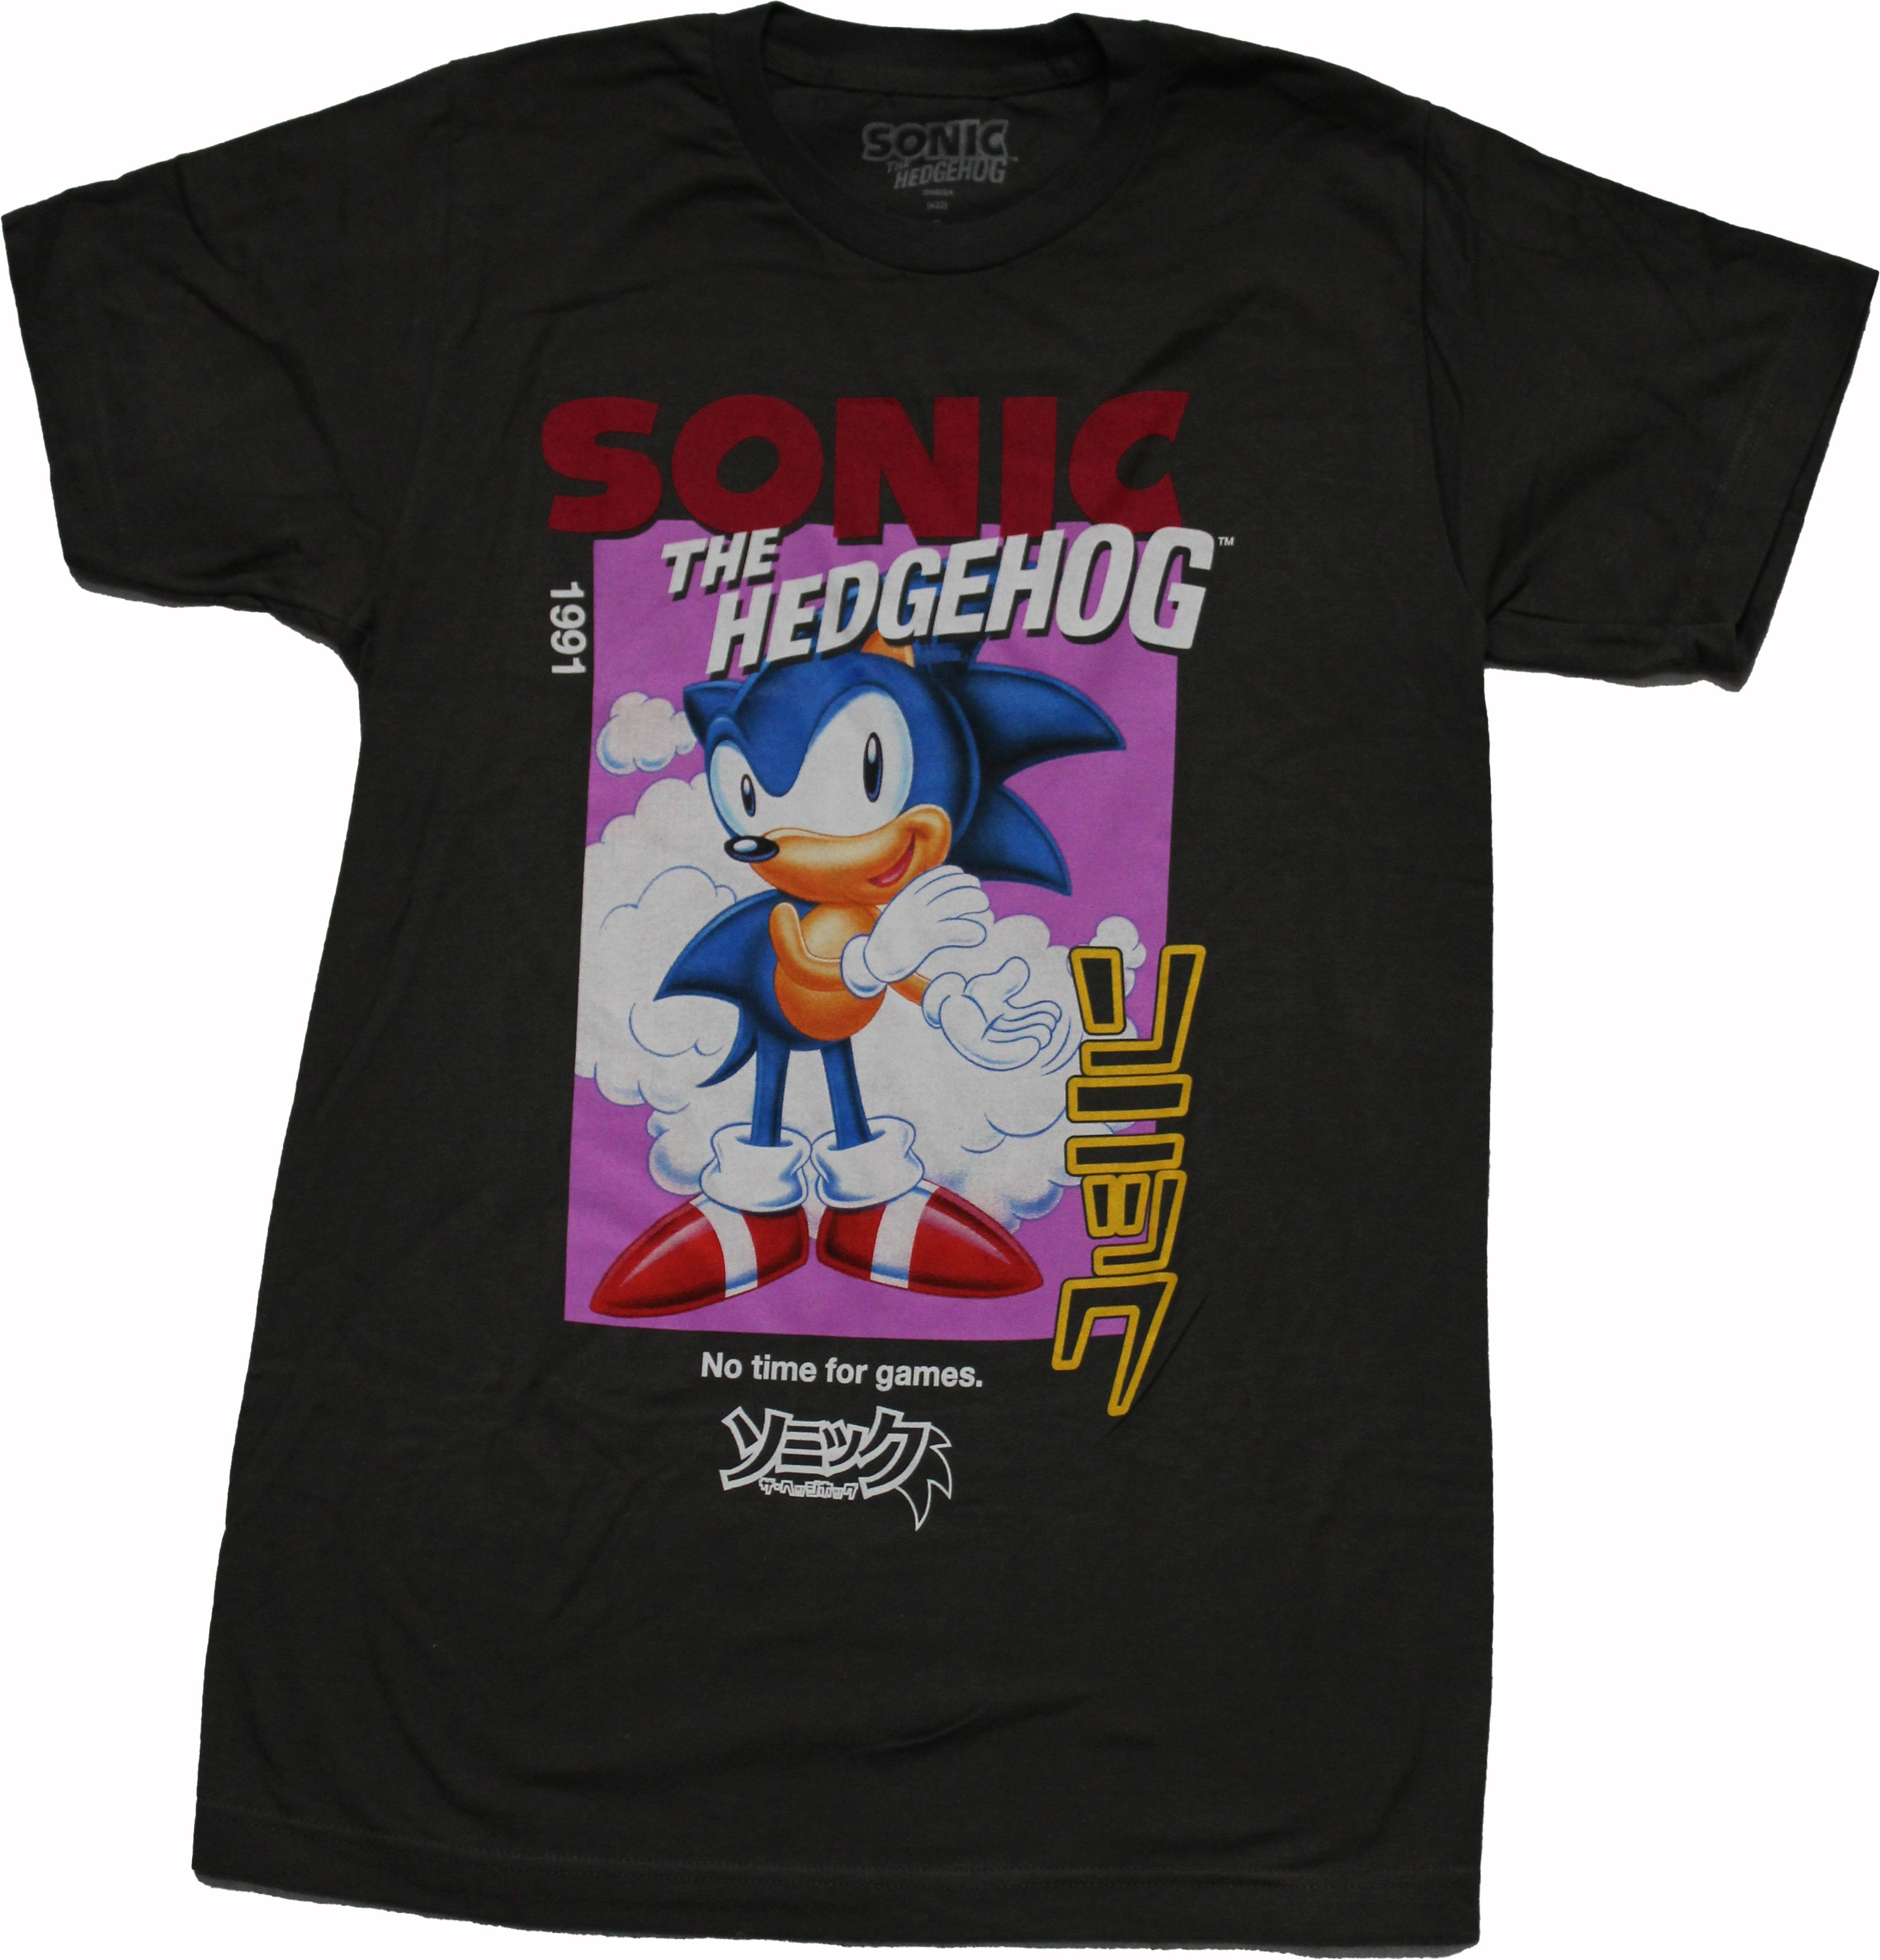 Sonic the Hedgehog T-Shirt - No Time For Games Kanji Image